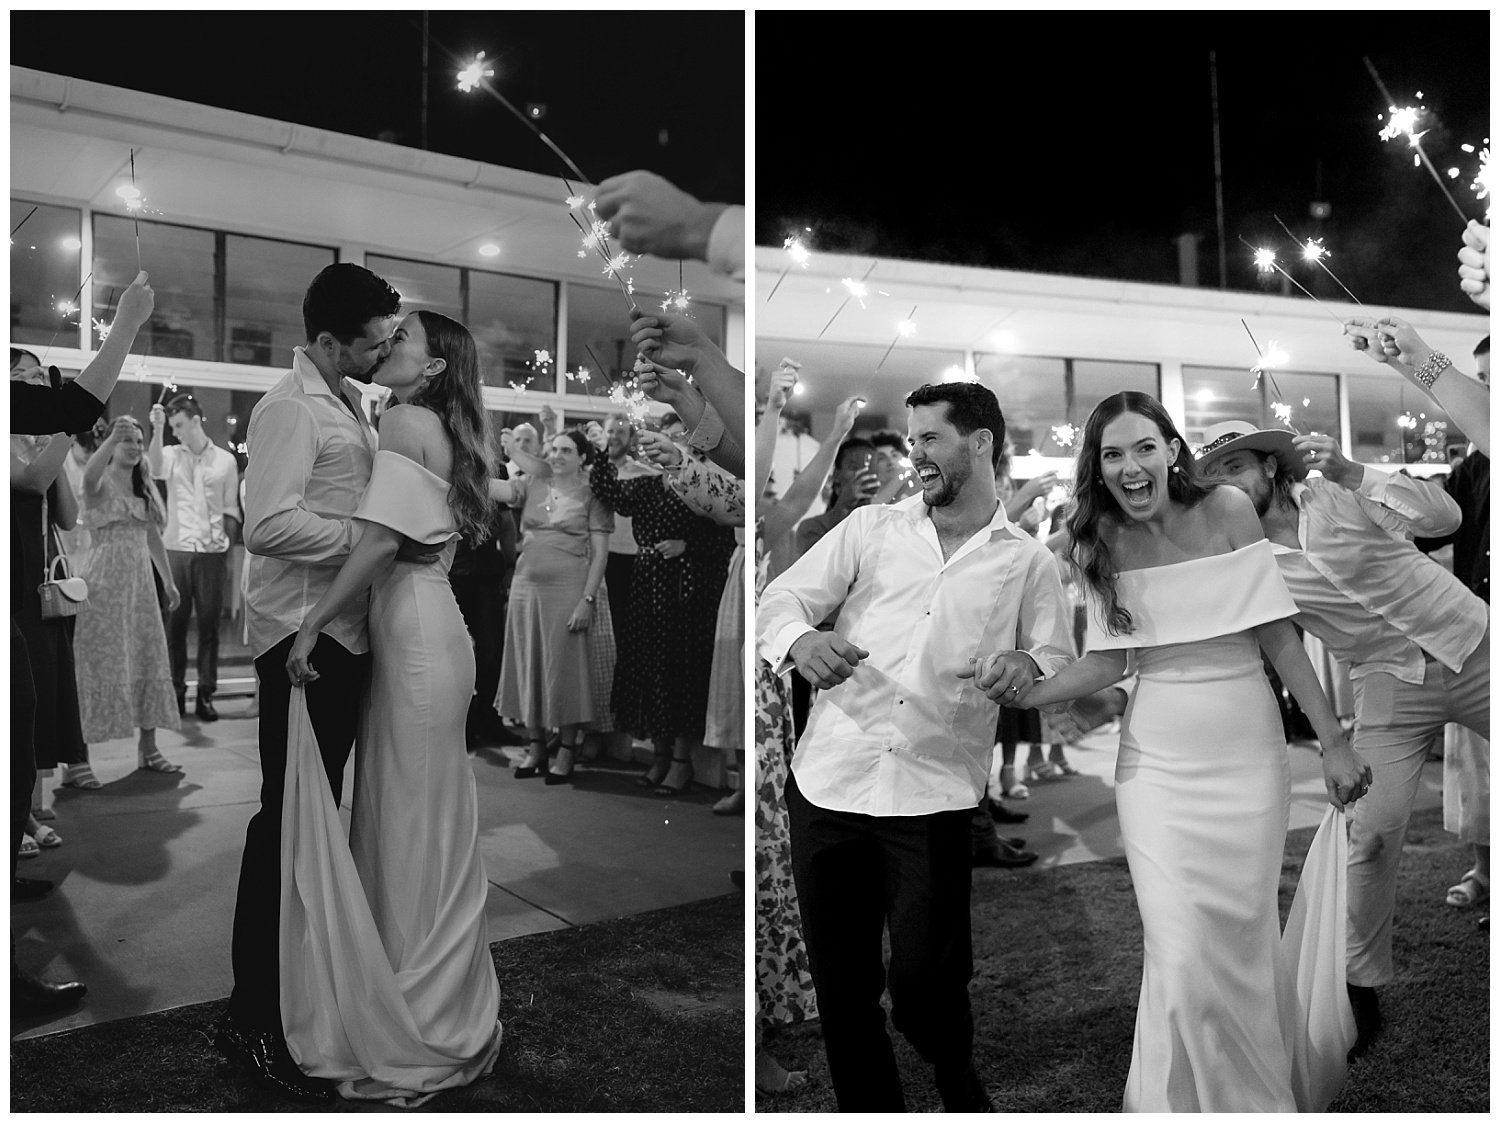 Gold-coast-wedding-photographer-captures-a-vibrant-Pier-33-wedding-day